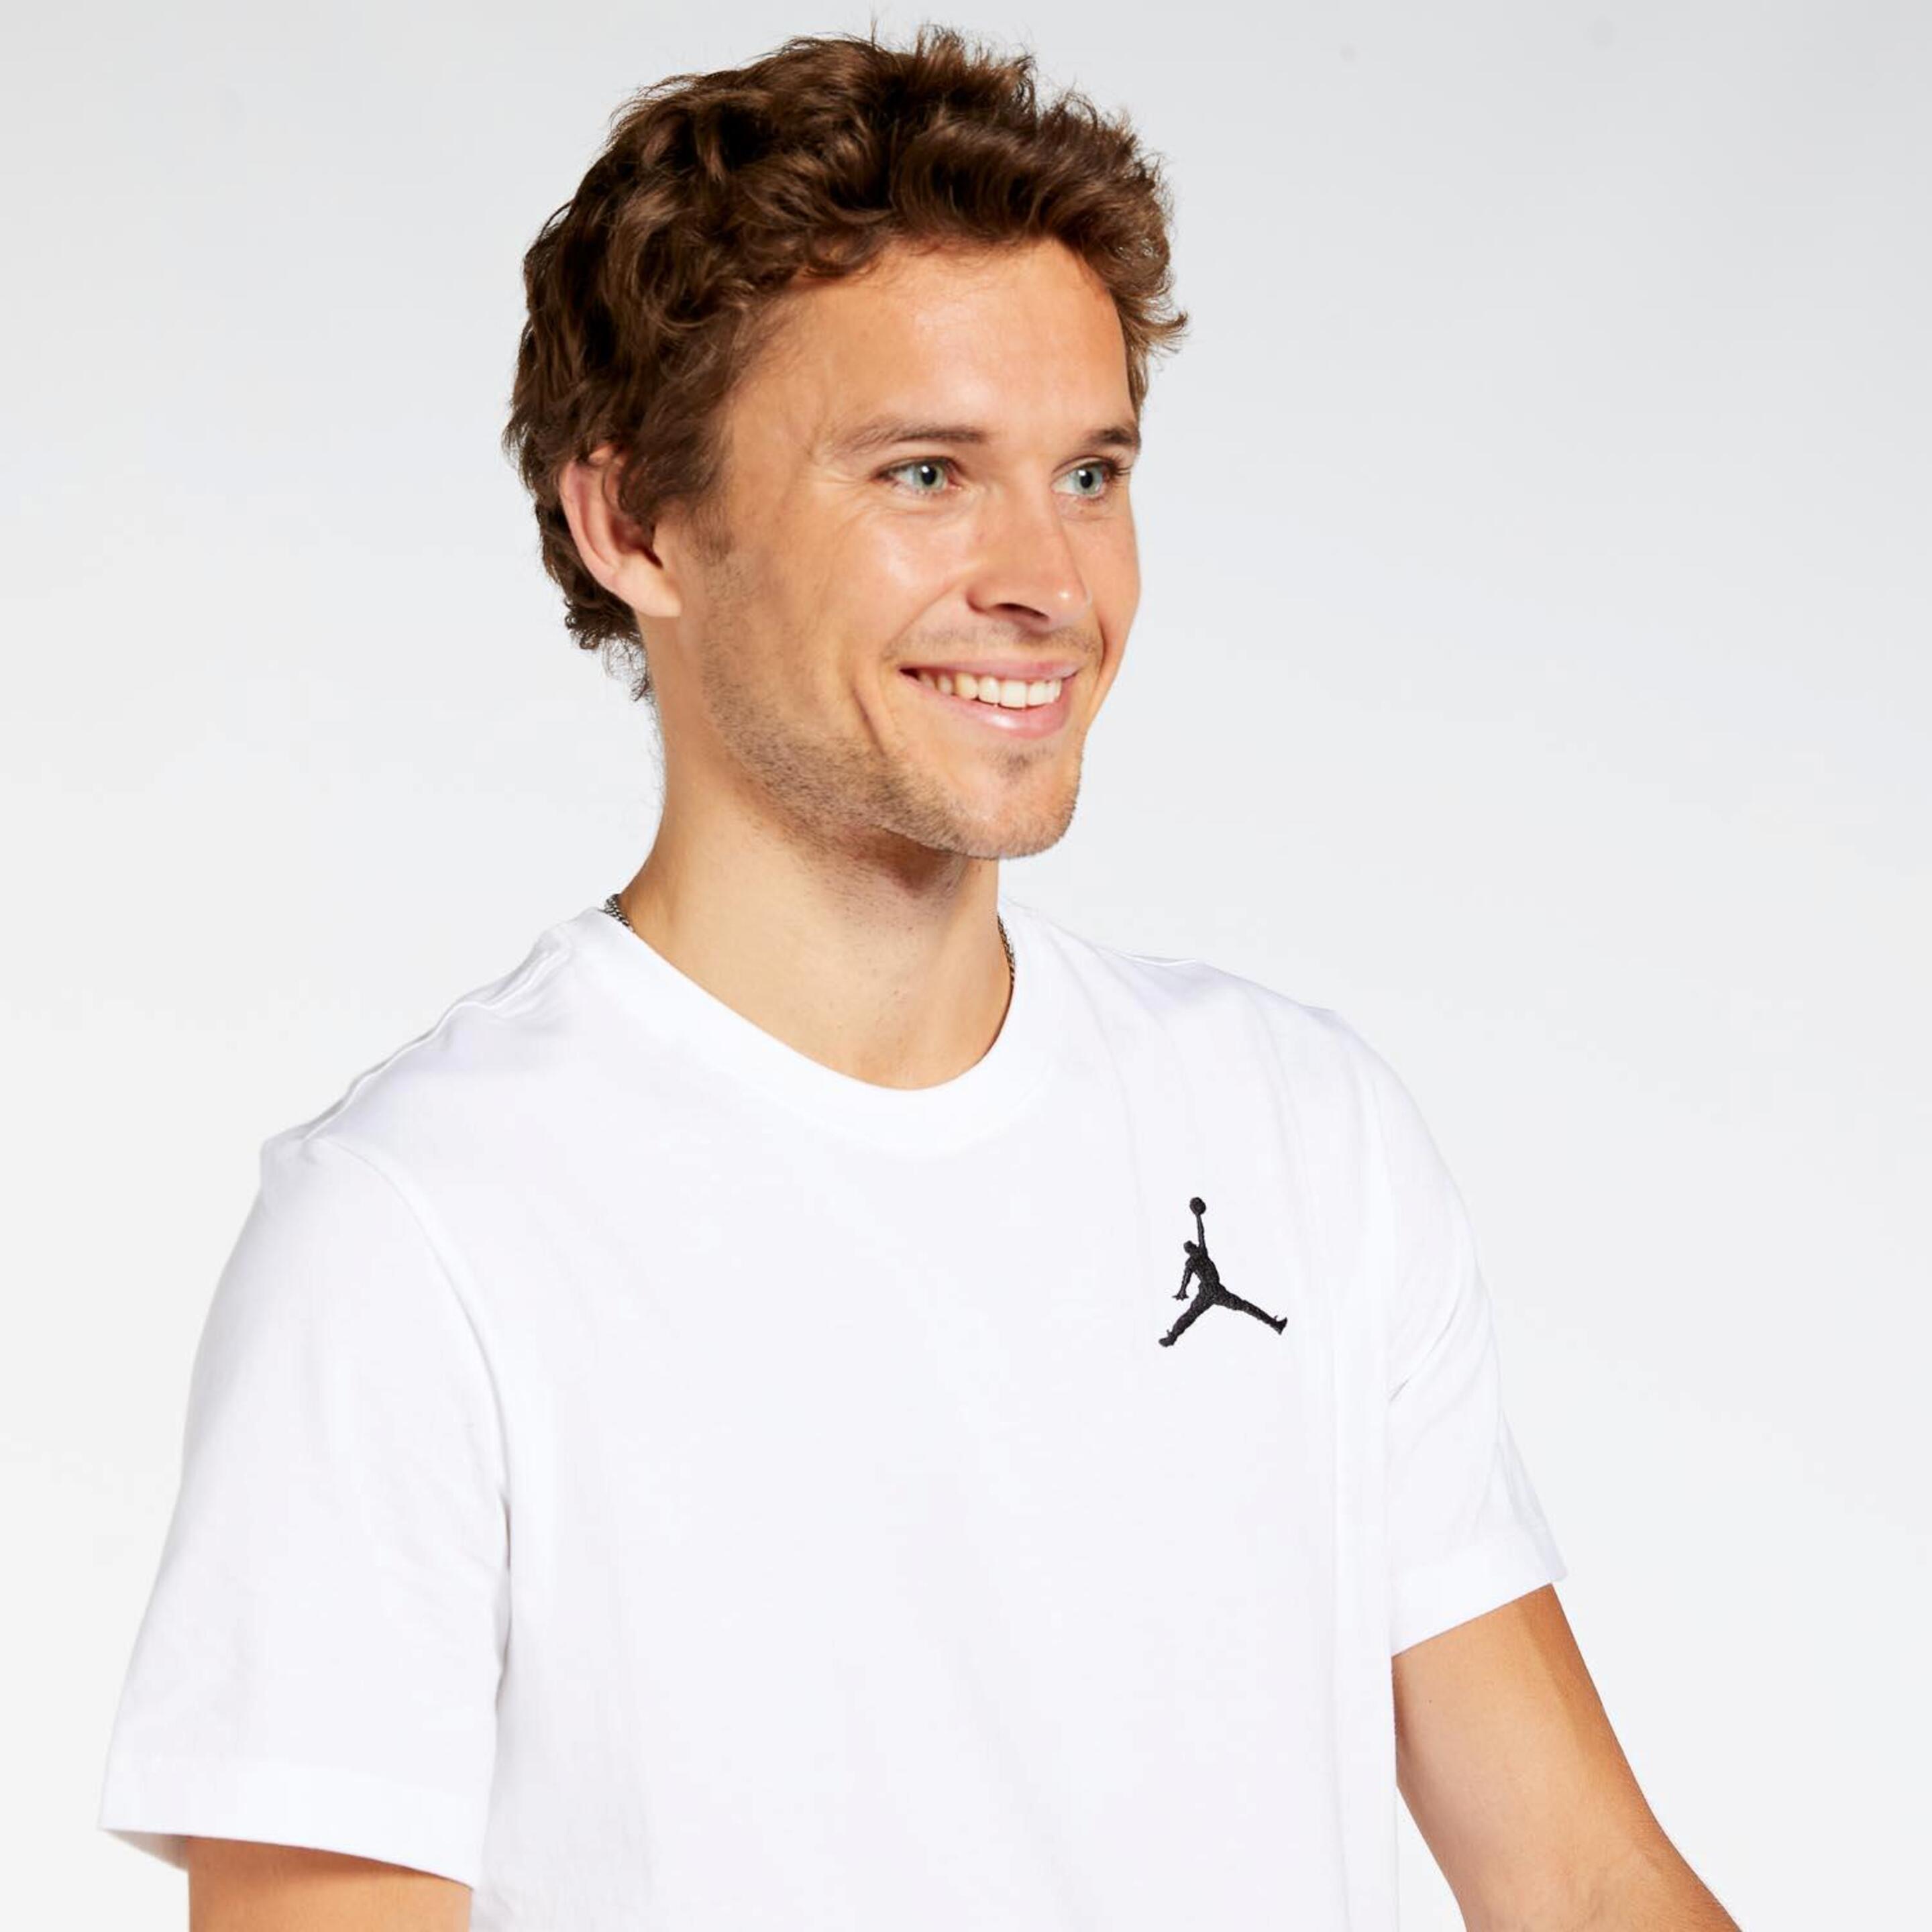 Jordan Jumpman - Blanco - Camiseta Hombre